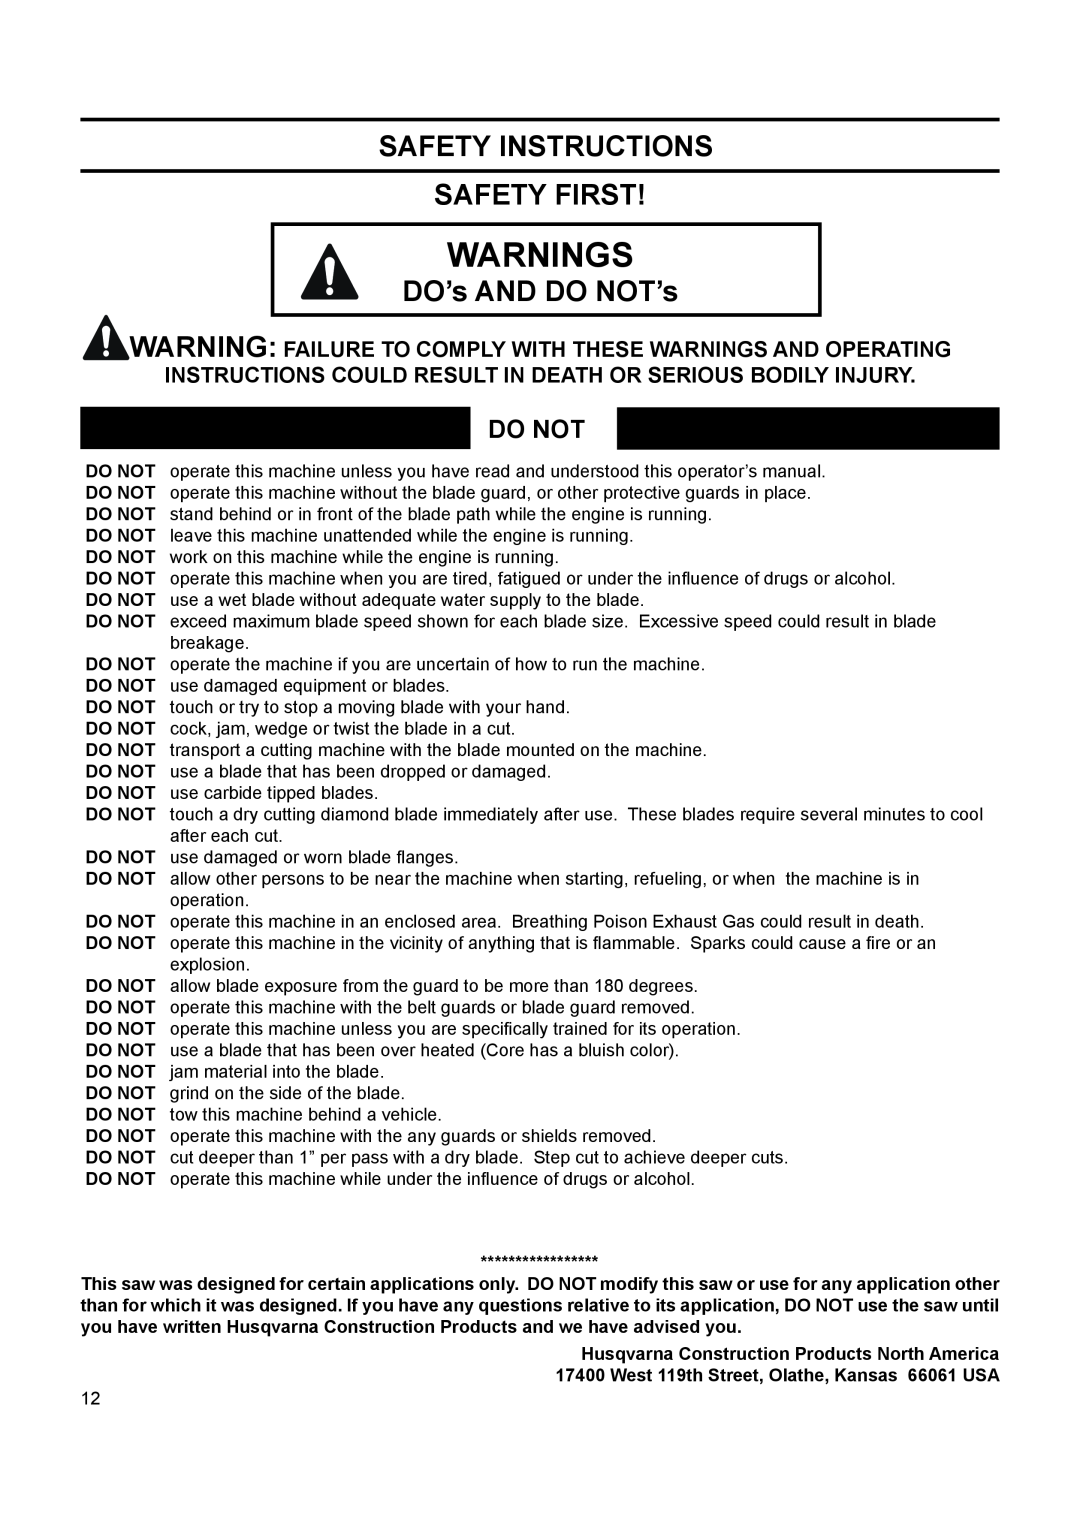 Husqvarna FS 524, FS 513, FS 520 manuel dutilisation Do Not, Warnings, Safety Instructions Safety First, DO’s AND DO NOT’s 